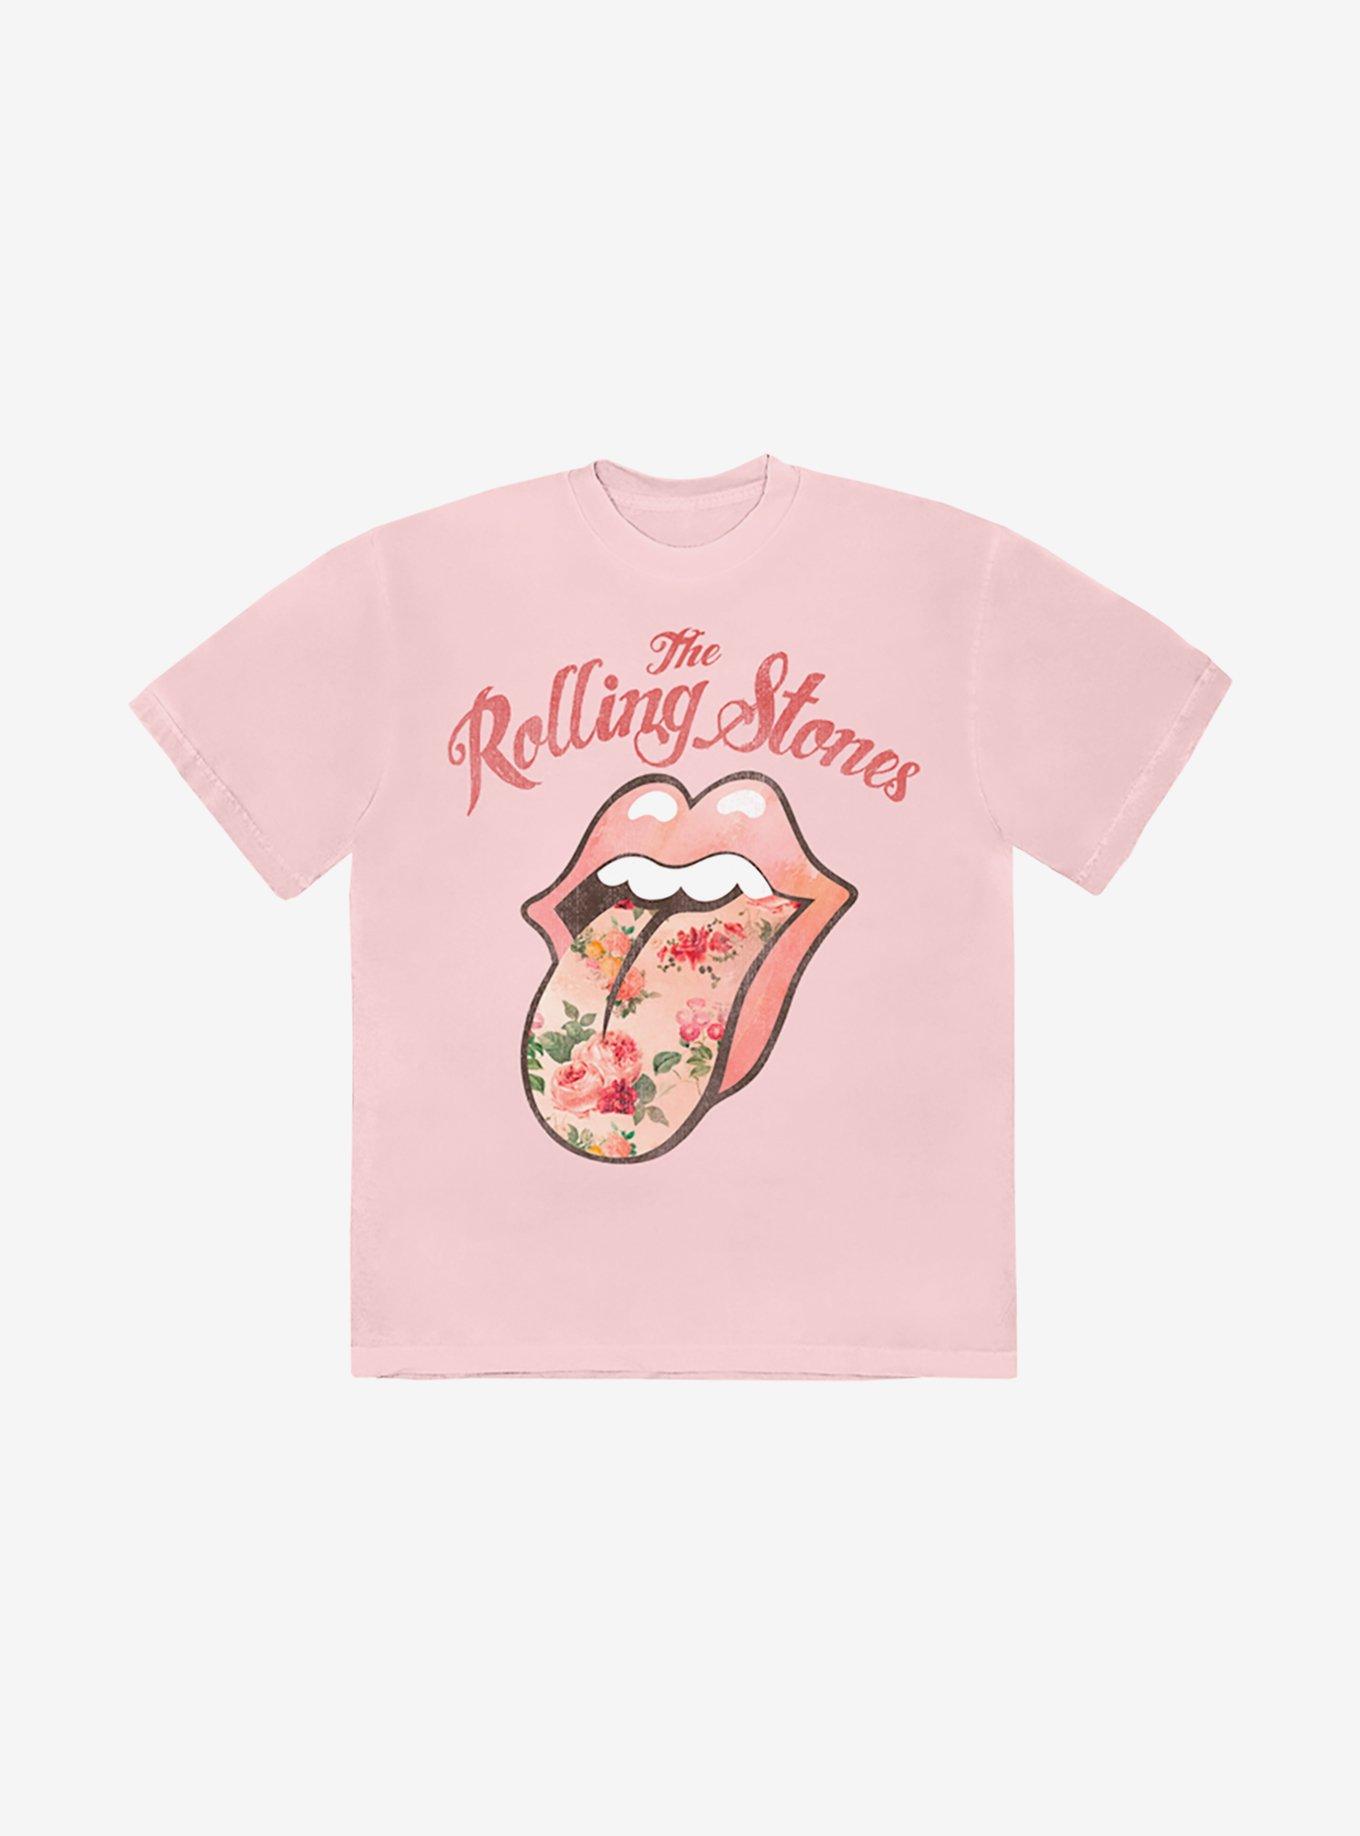 The Rolling Stones Floral Logo Boyfriend Fit Girls T-Shirt